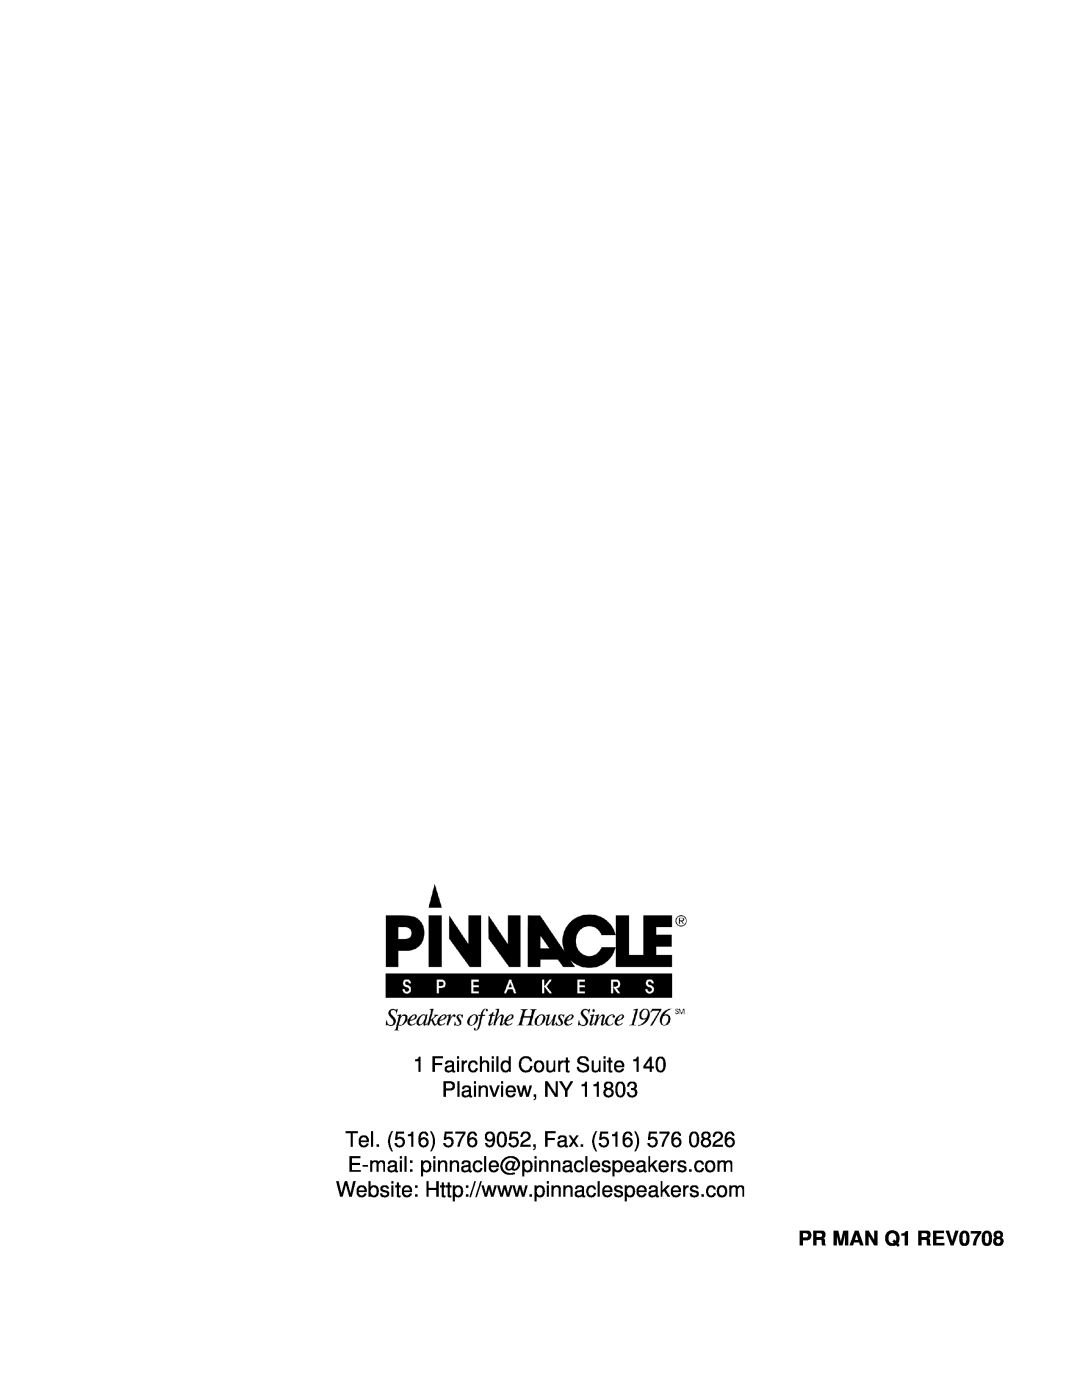 Pinnacle Speakers 200, 225, 125 owner manual Fairchild Court Suite Plainview, NY, Tel. 516 576 9052, Fax, PR MAN Q1 REV0708 